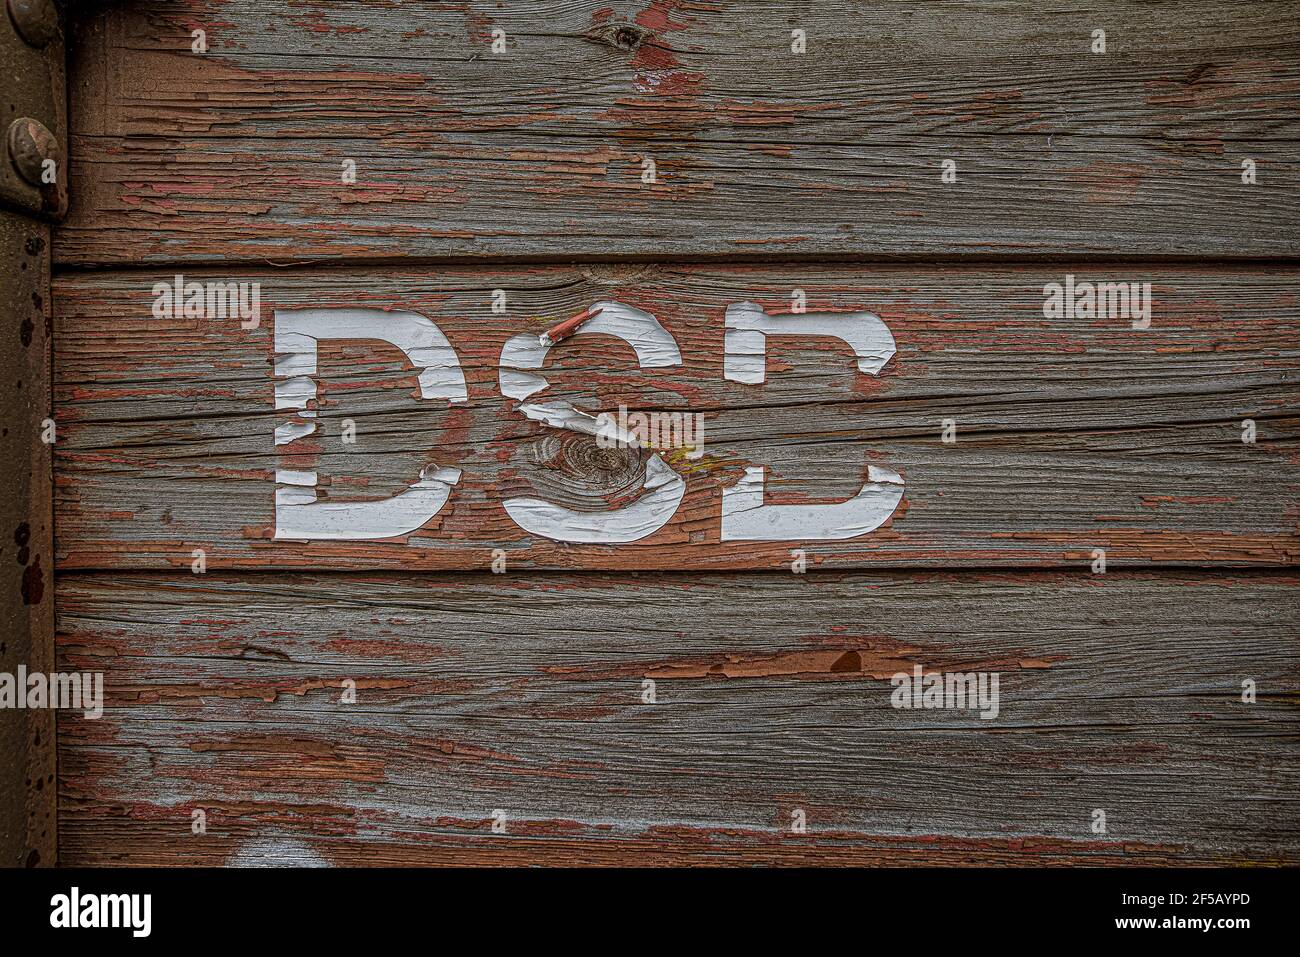 DSB logo on the planks of an old railway carriage, Copenhagen, Mars 20, 2021 Stock Photo